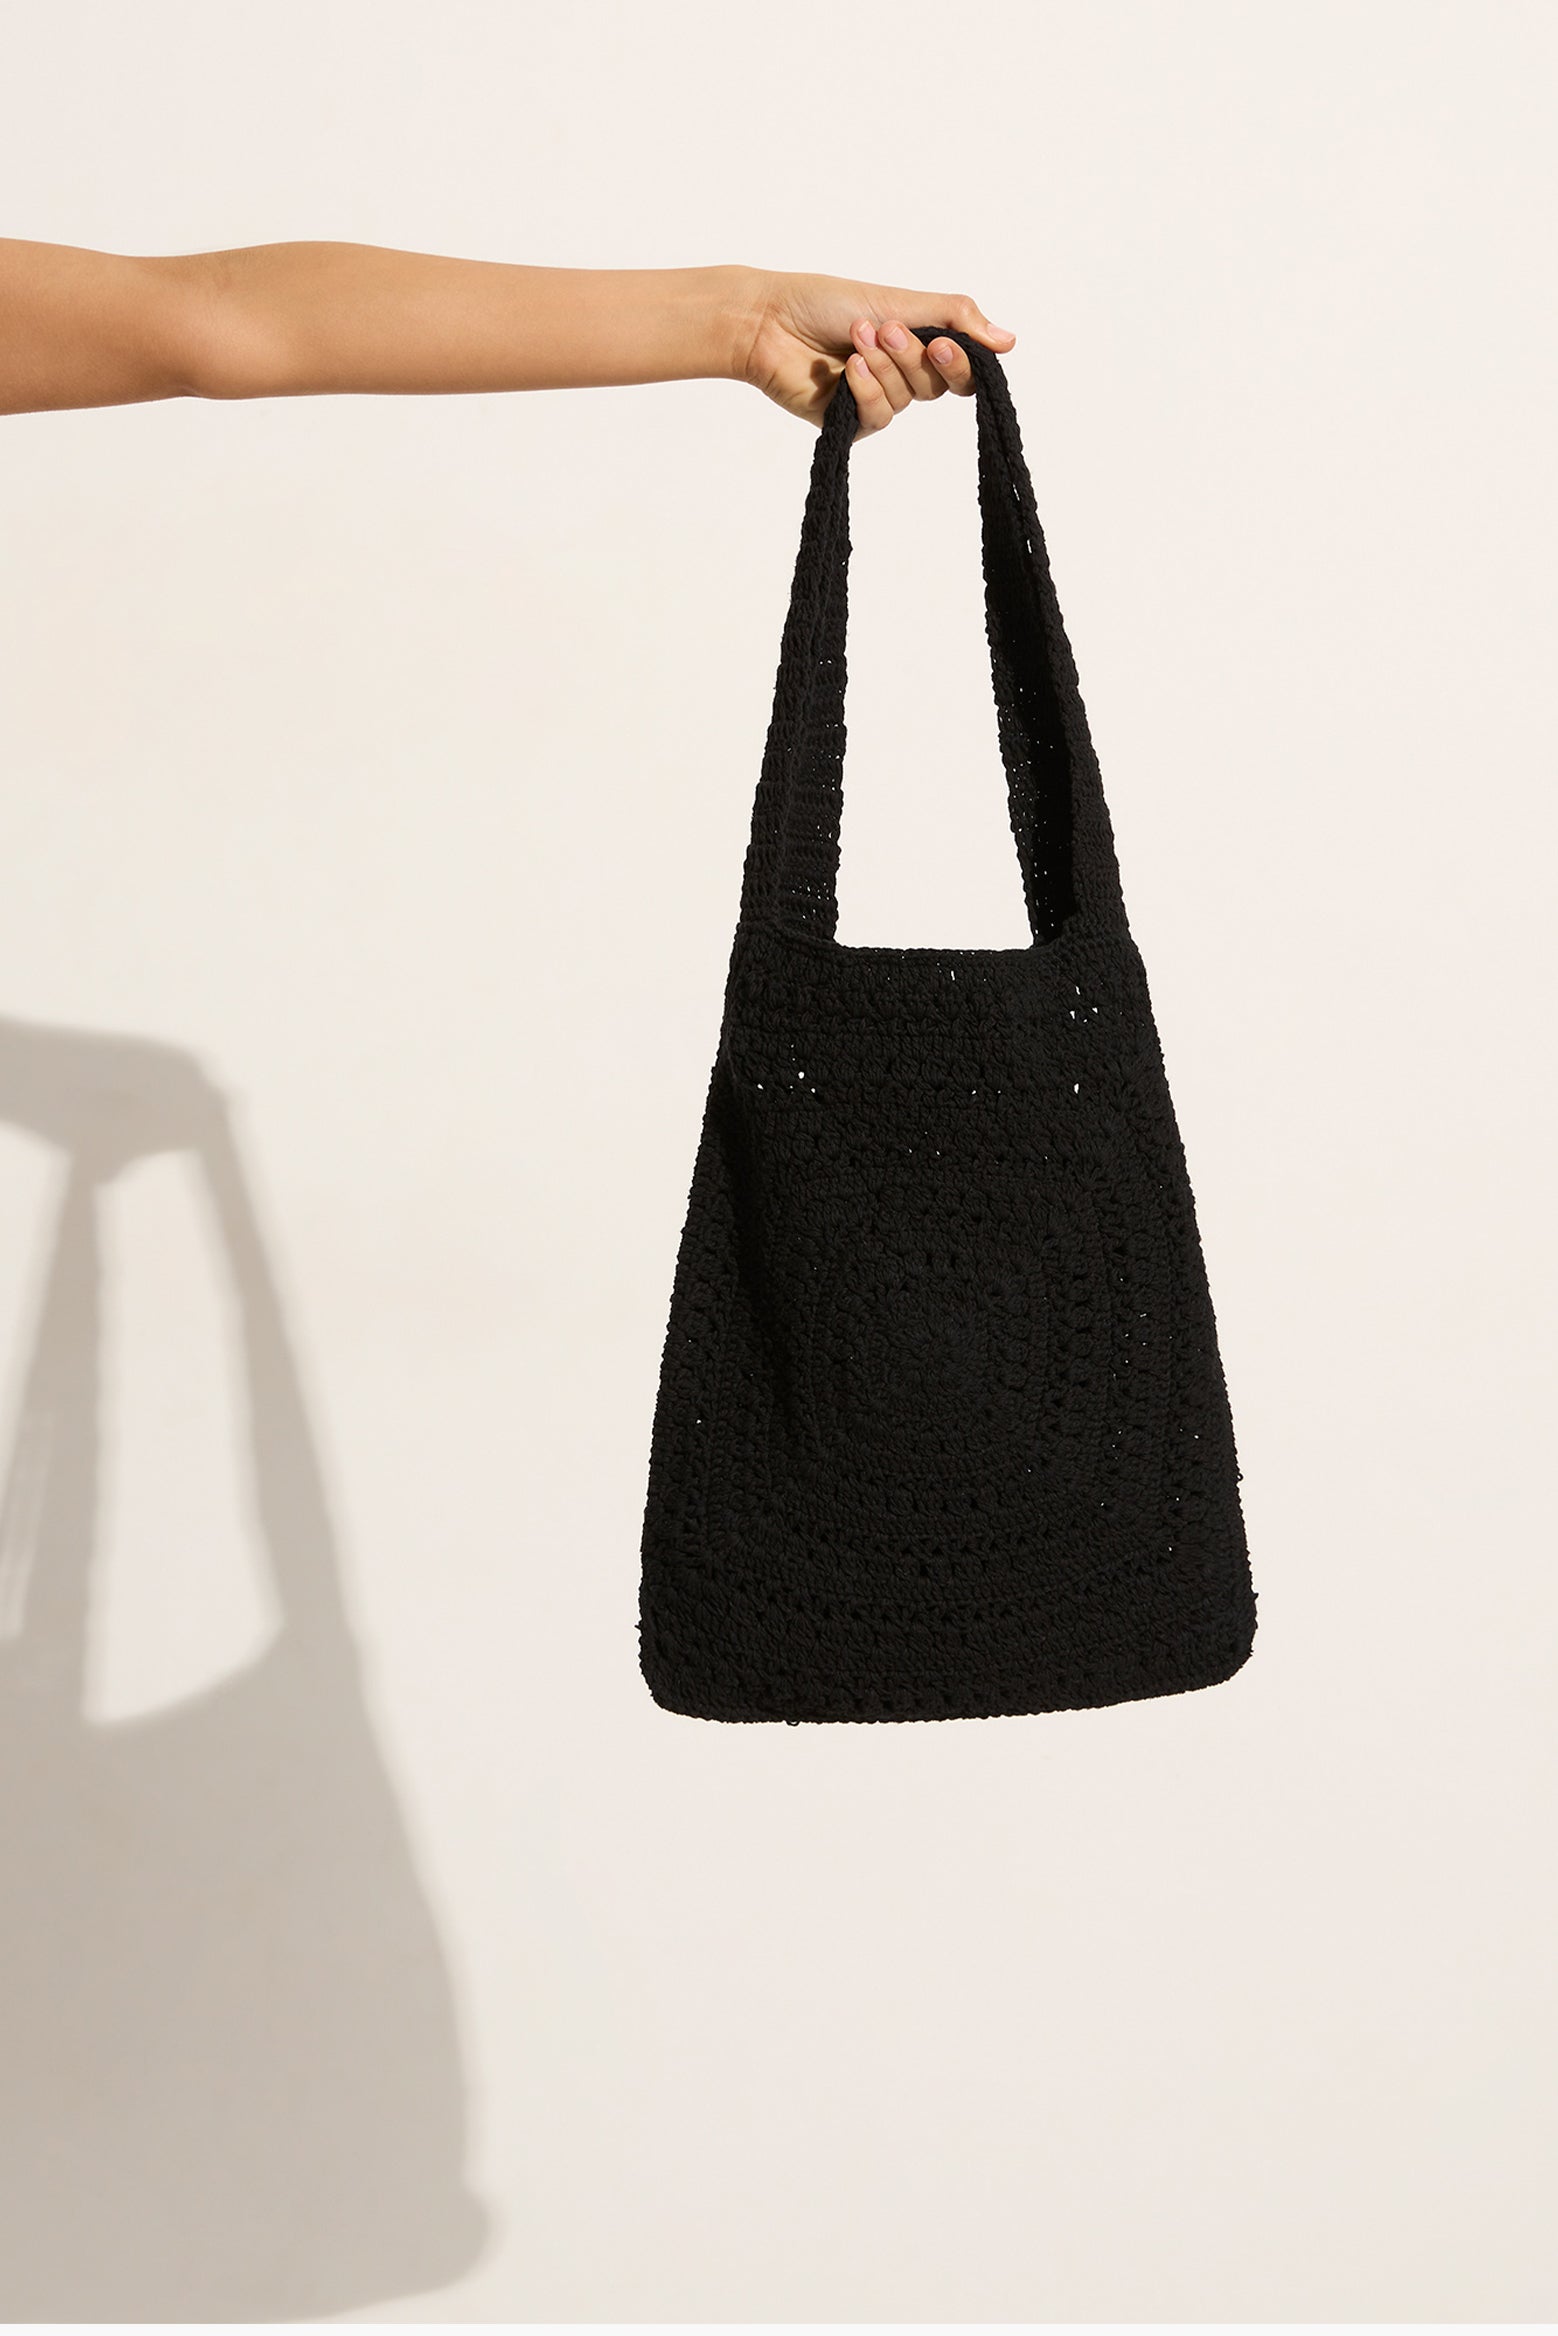 Faithfull The Brand Piccolo Crochet Bag in Black available at The New Trend Australia. 